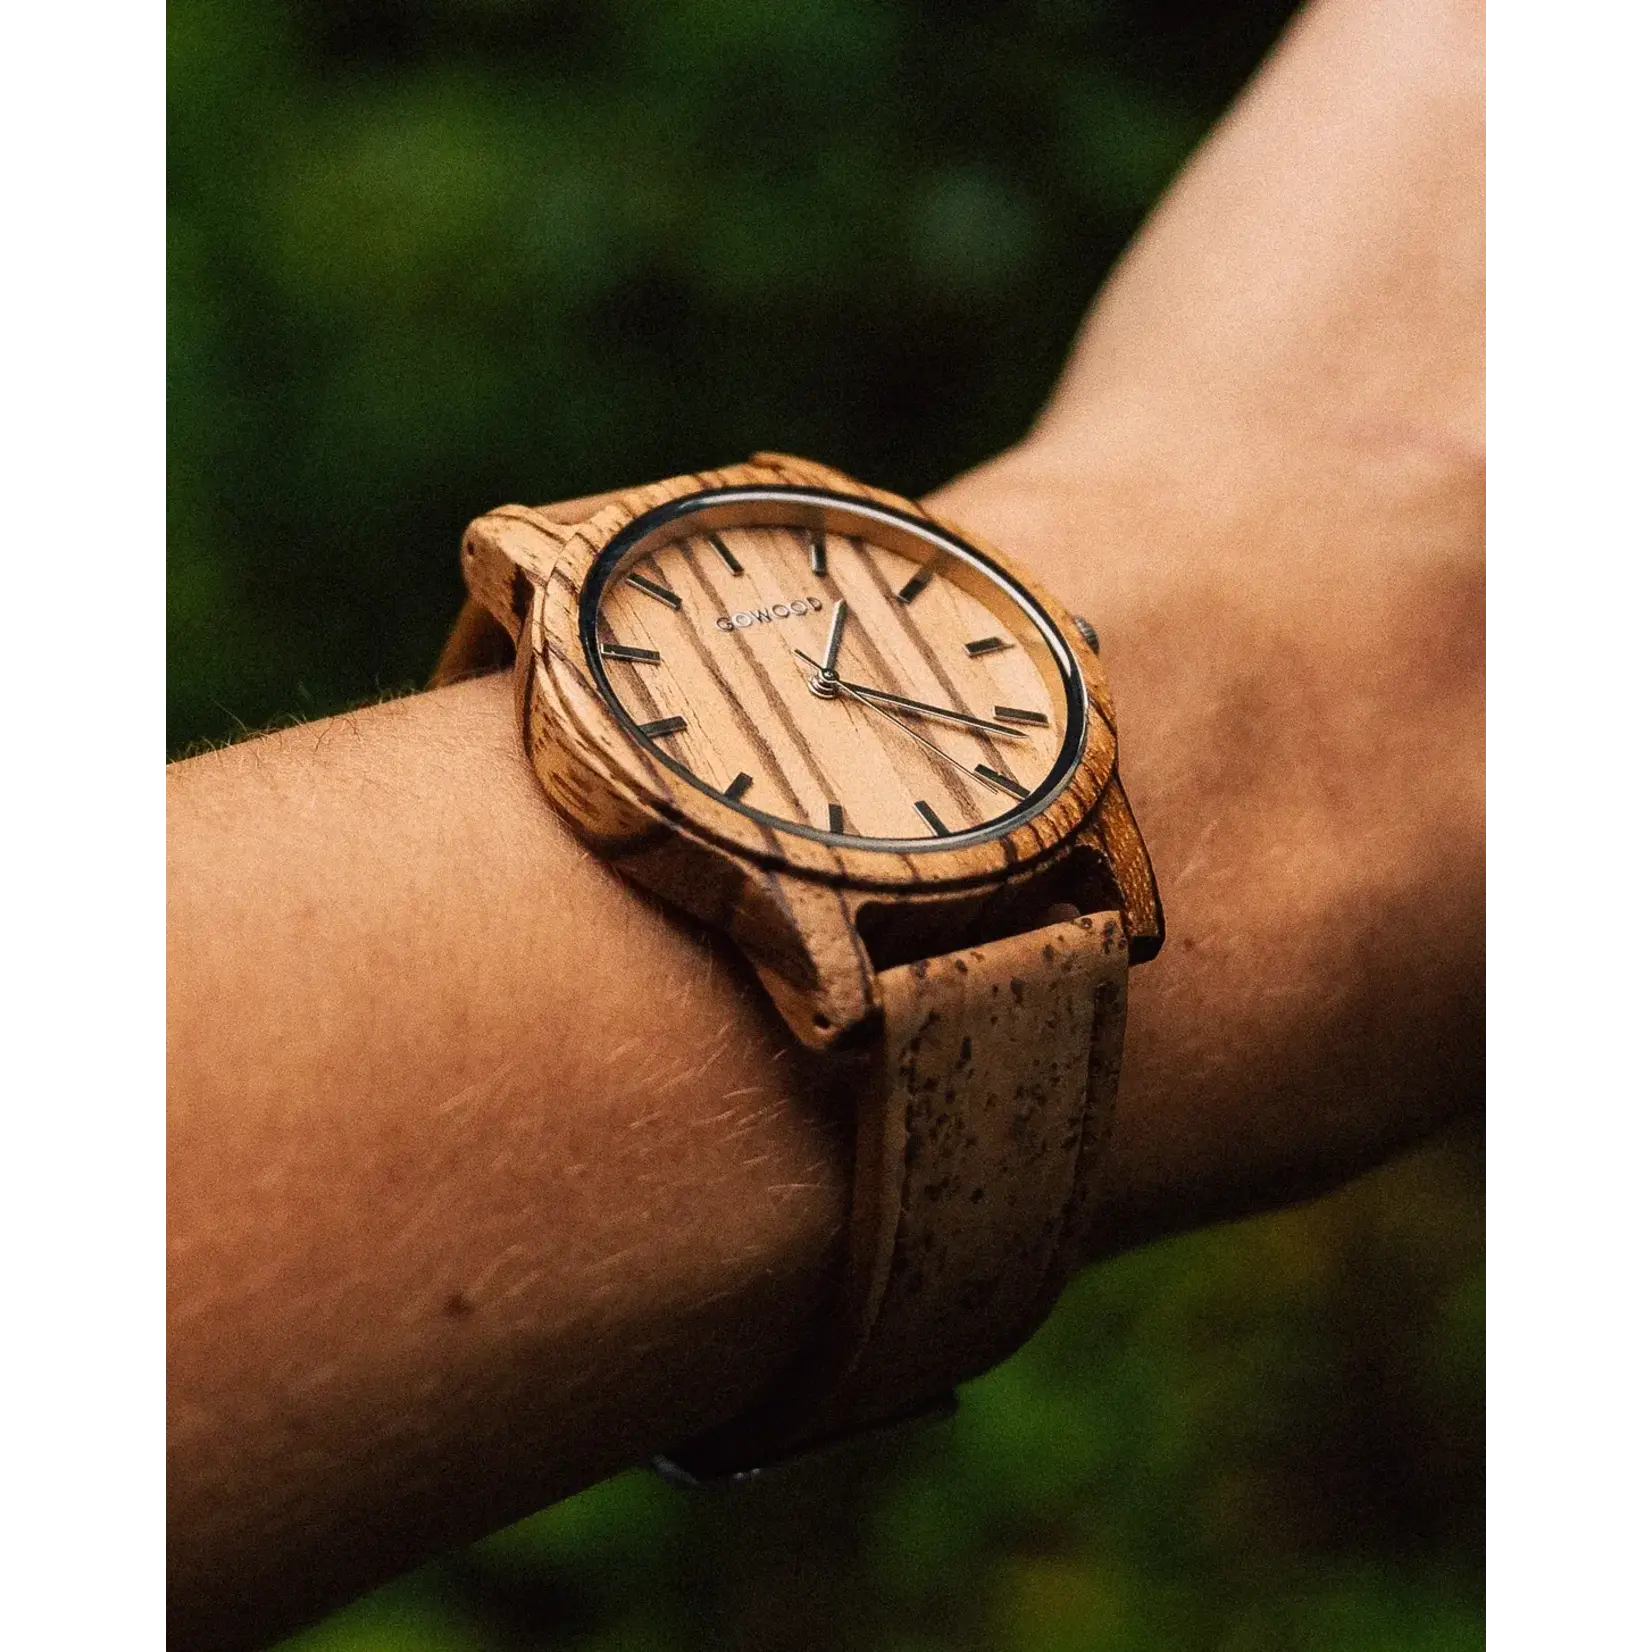 Go Wood Zebrawood Watch With Portuguese Cork Wristband